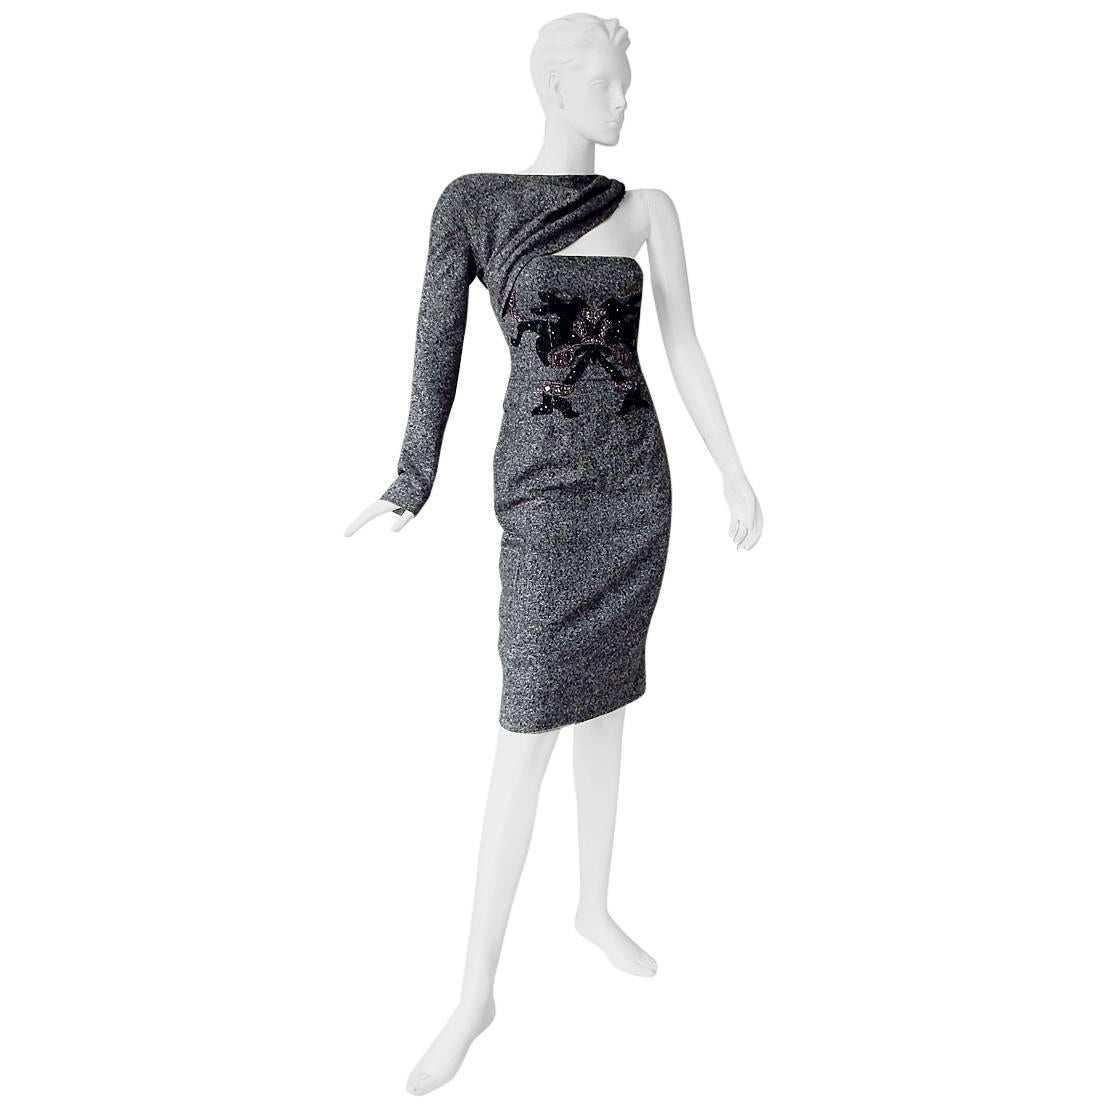 Christian Dior by John Galliano 60 Years of Fashion Celebration Runway Dress